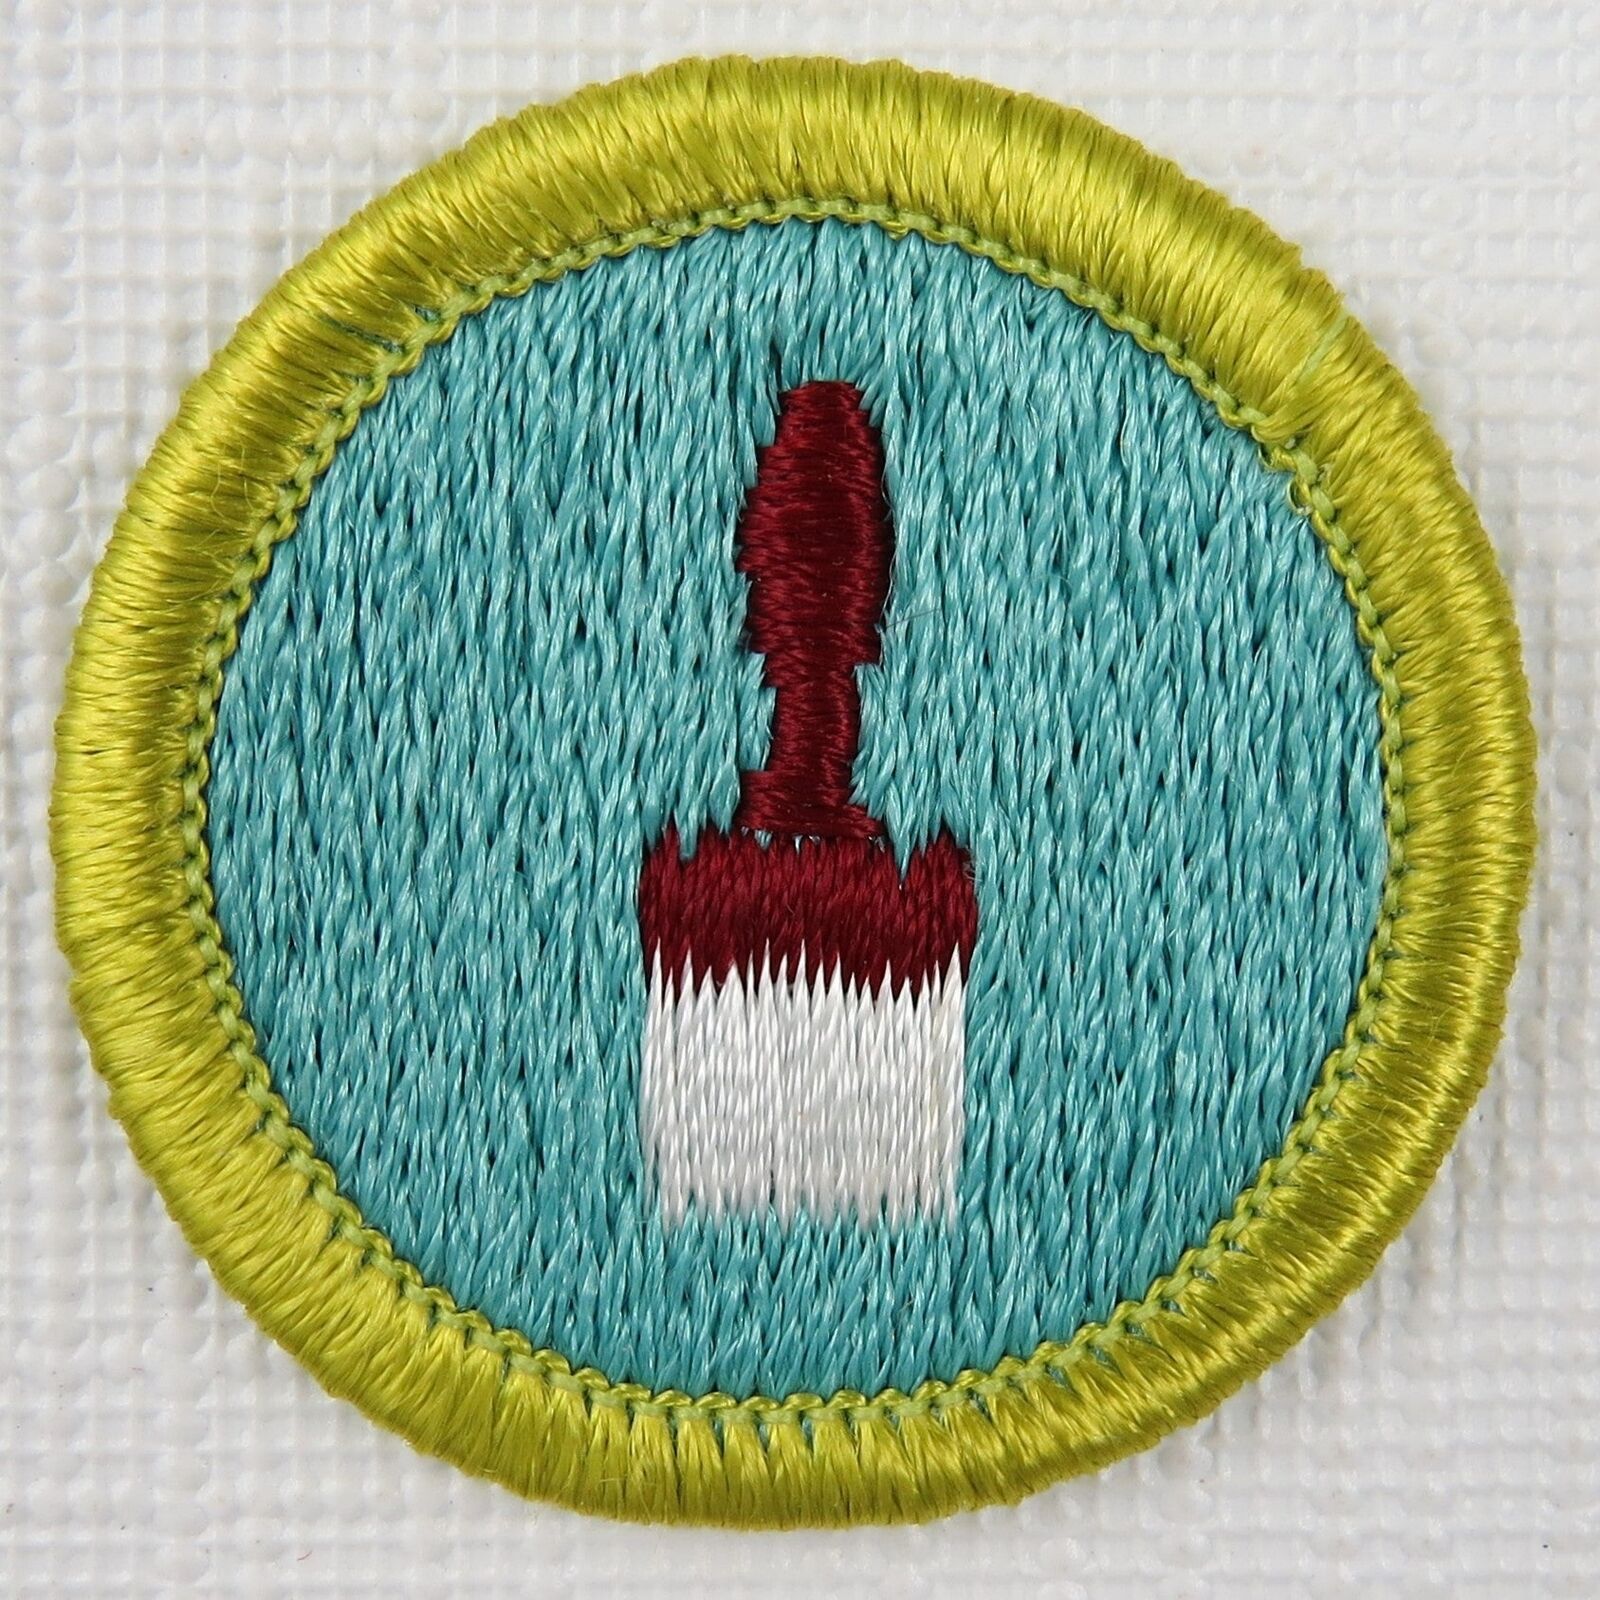 Painting Current Plastic Back Merit Badge [MB-154]